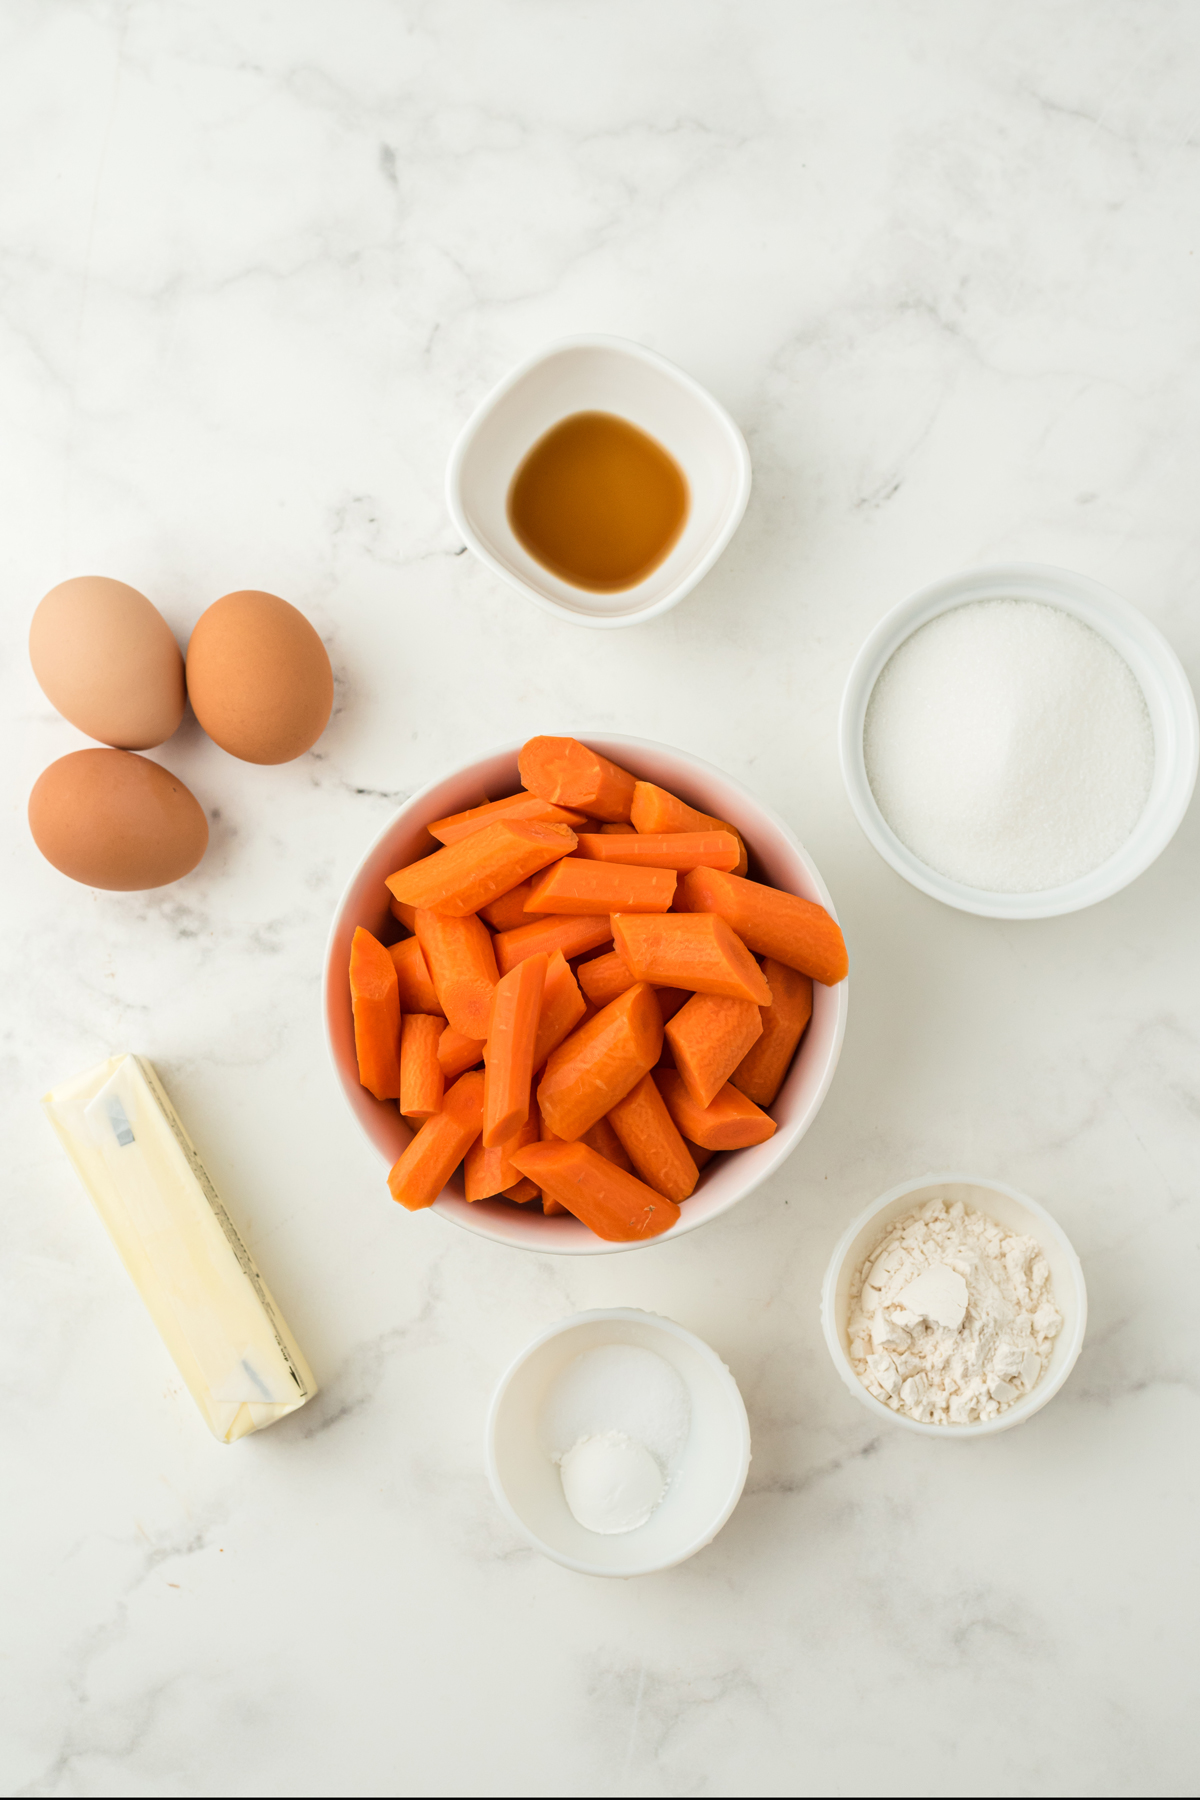 Ingredients of Carrot Souffle Recipe includes 1lb carrots, 1 stick butter, 3 eggs, sugar, flour, baking powder, vanilla, and salt.